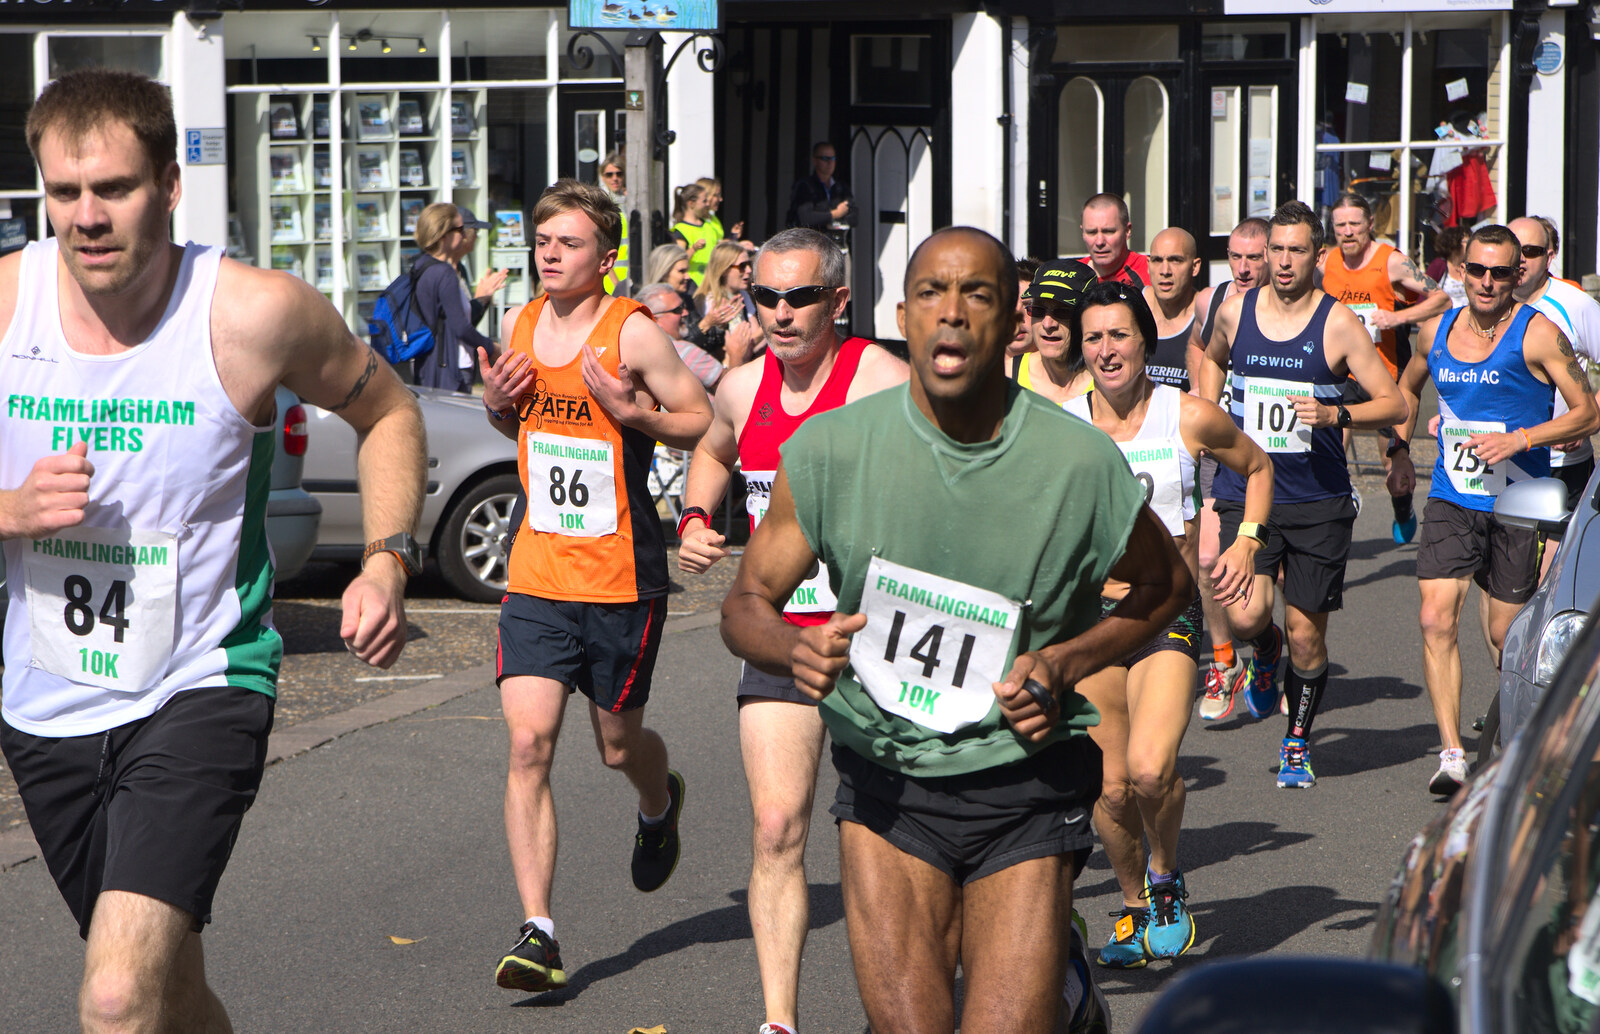 More club runners from The Framlingham 10k Run, Suffolk - 31st August 2014